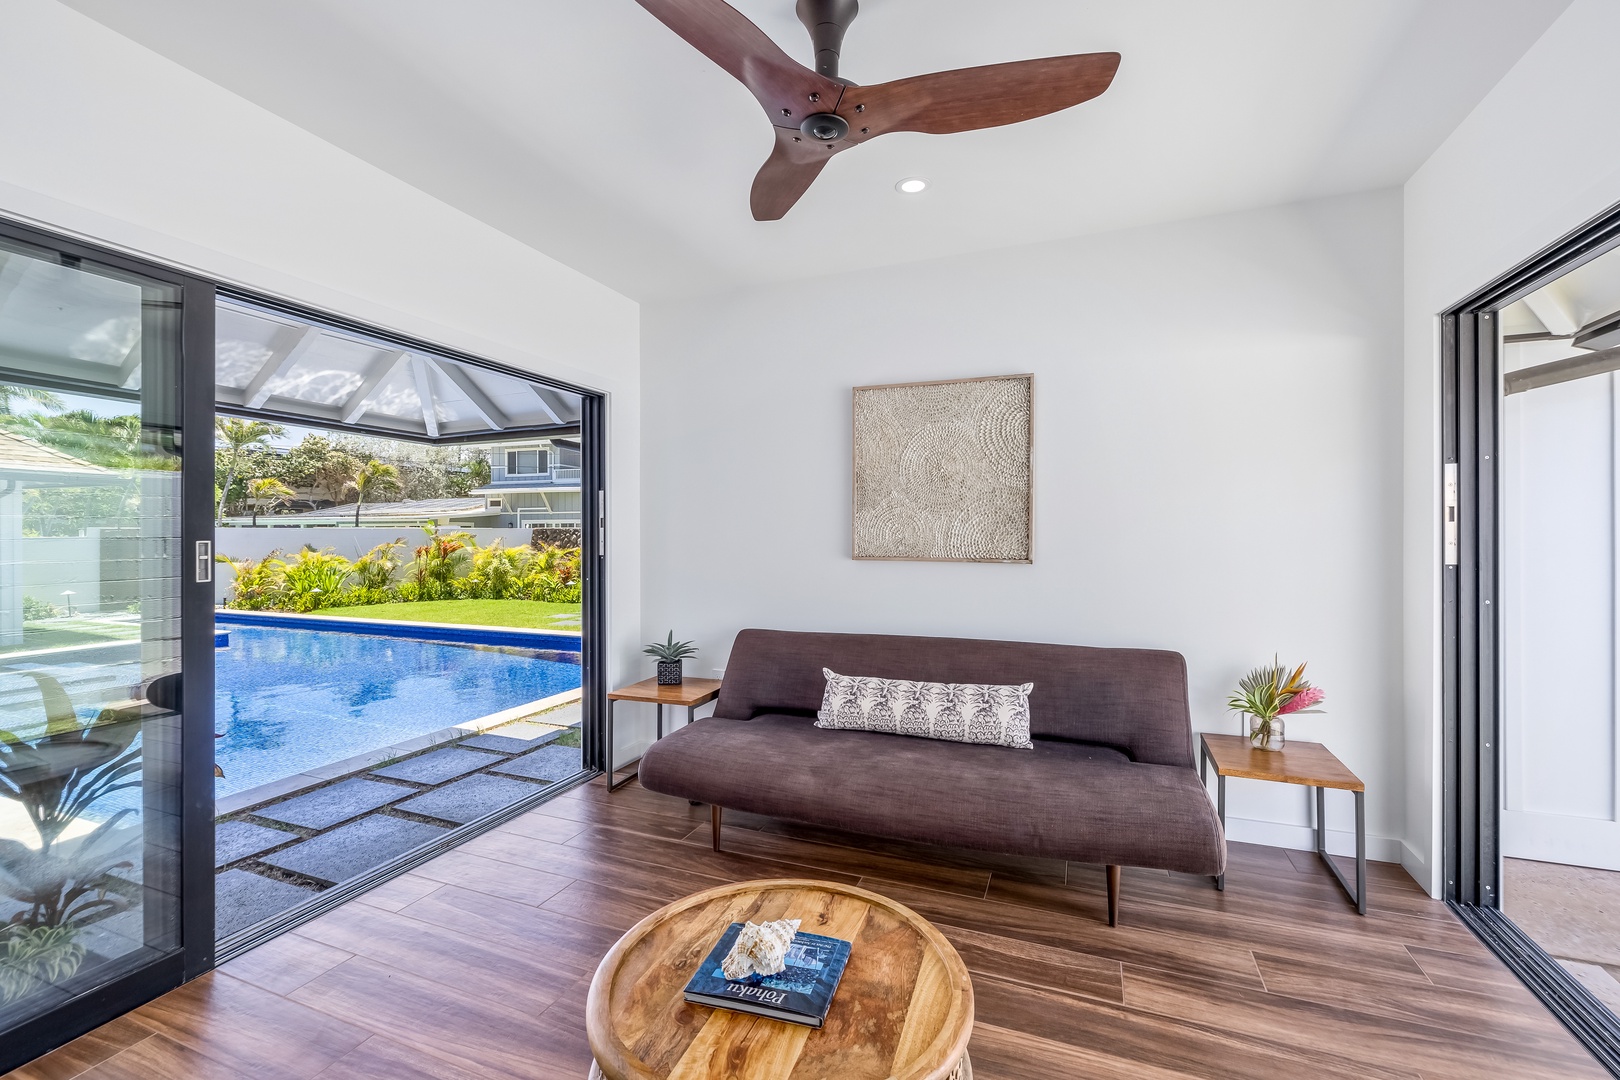 Kailua Vacation Rentals, Kailua Beach Villa - Bonus room with sleeper sofa and pool view